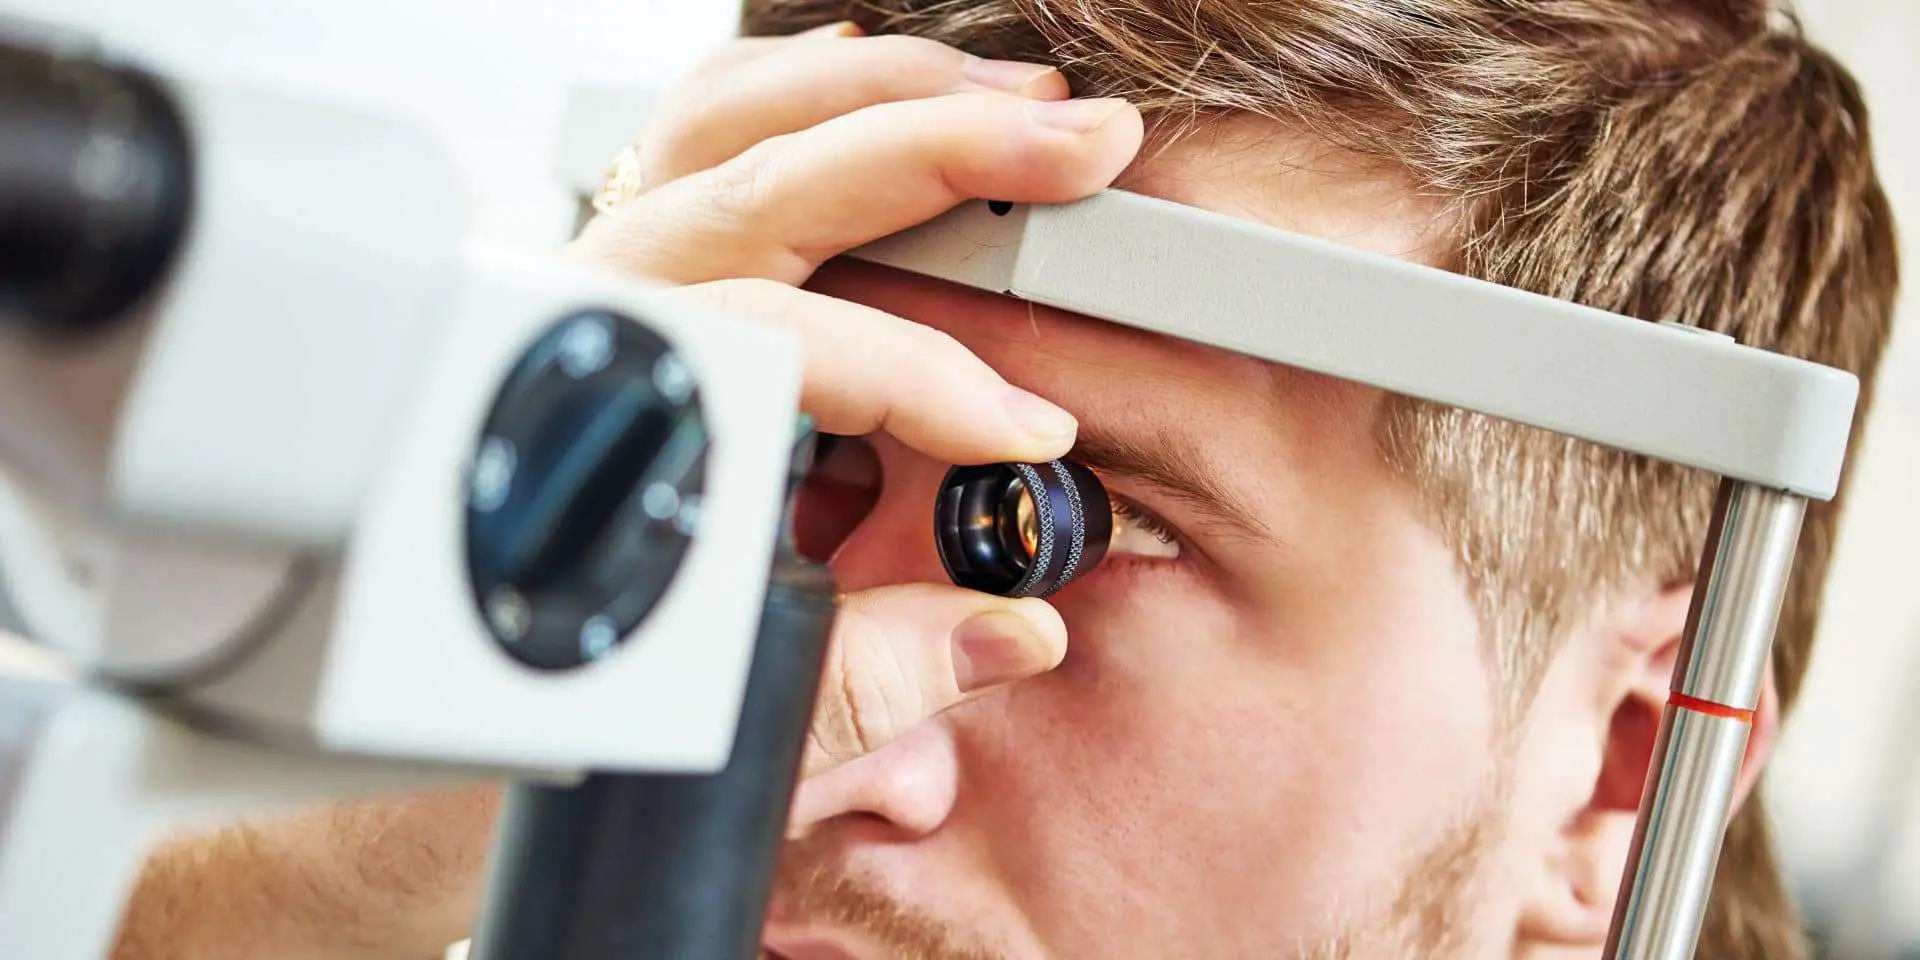 Does Laser Eye Surgery Hurt?